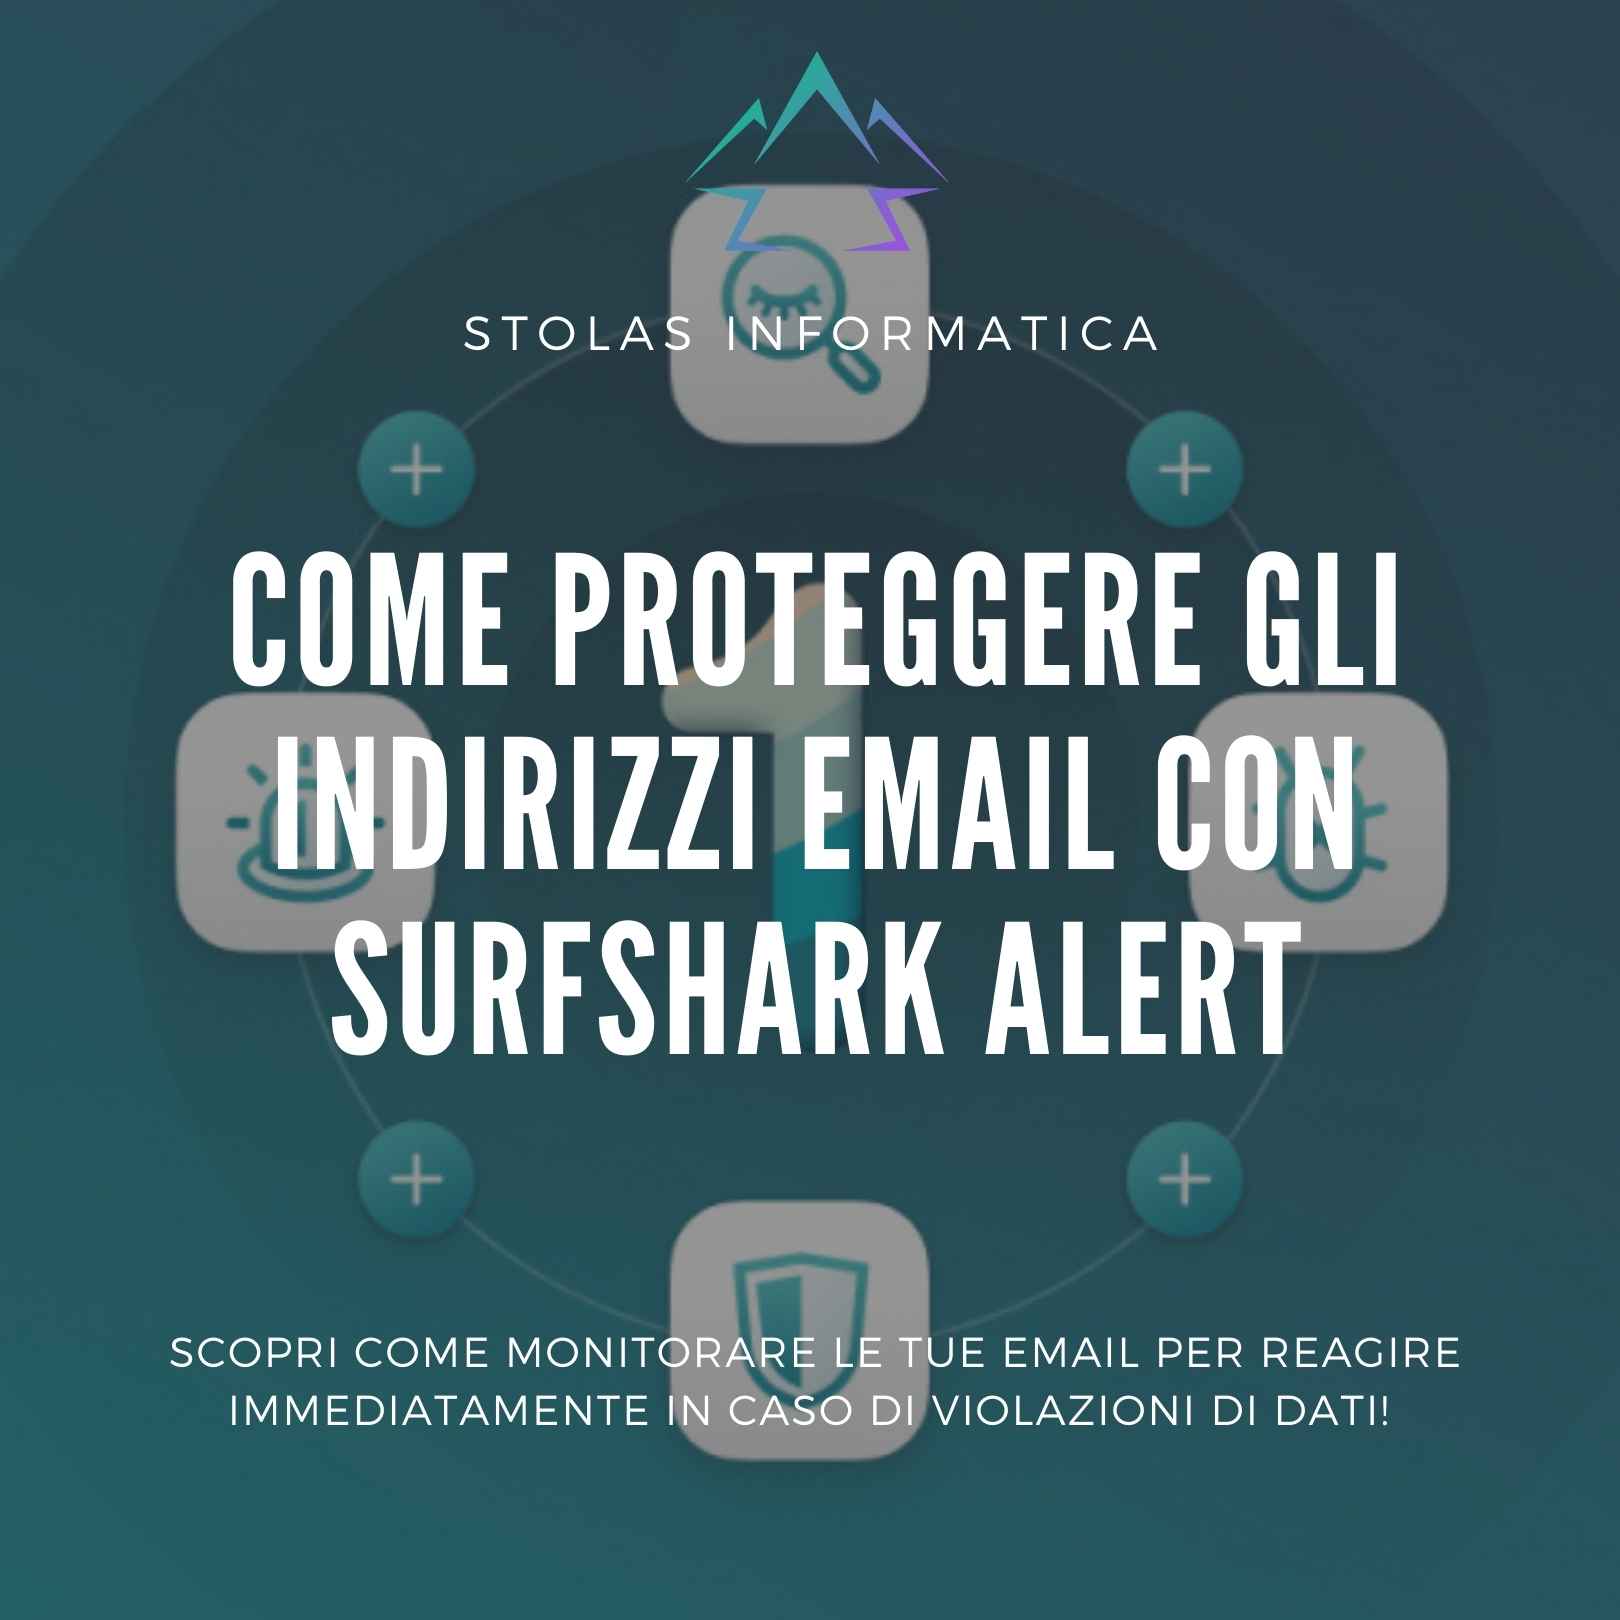 proteggere-indirizzi-email-surfshark-alert-cover